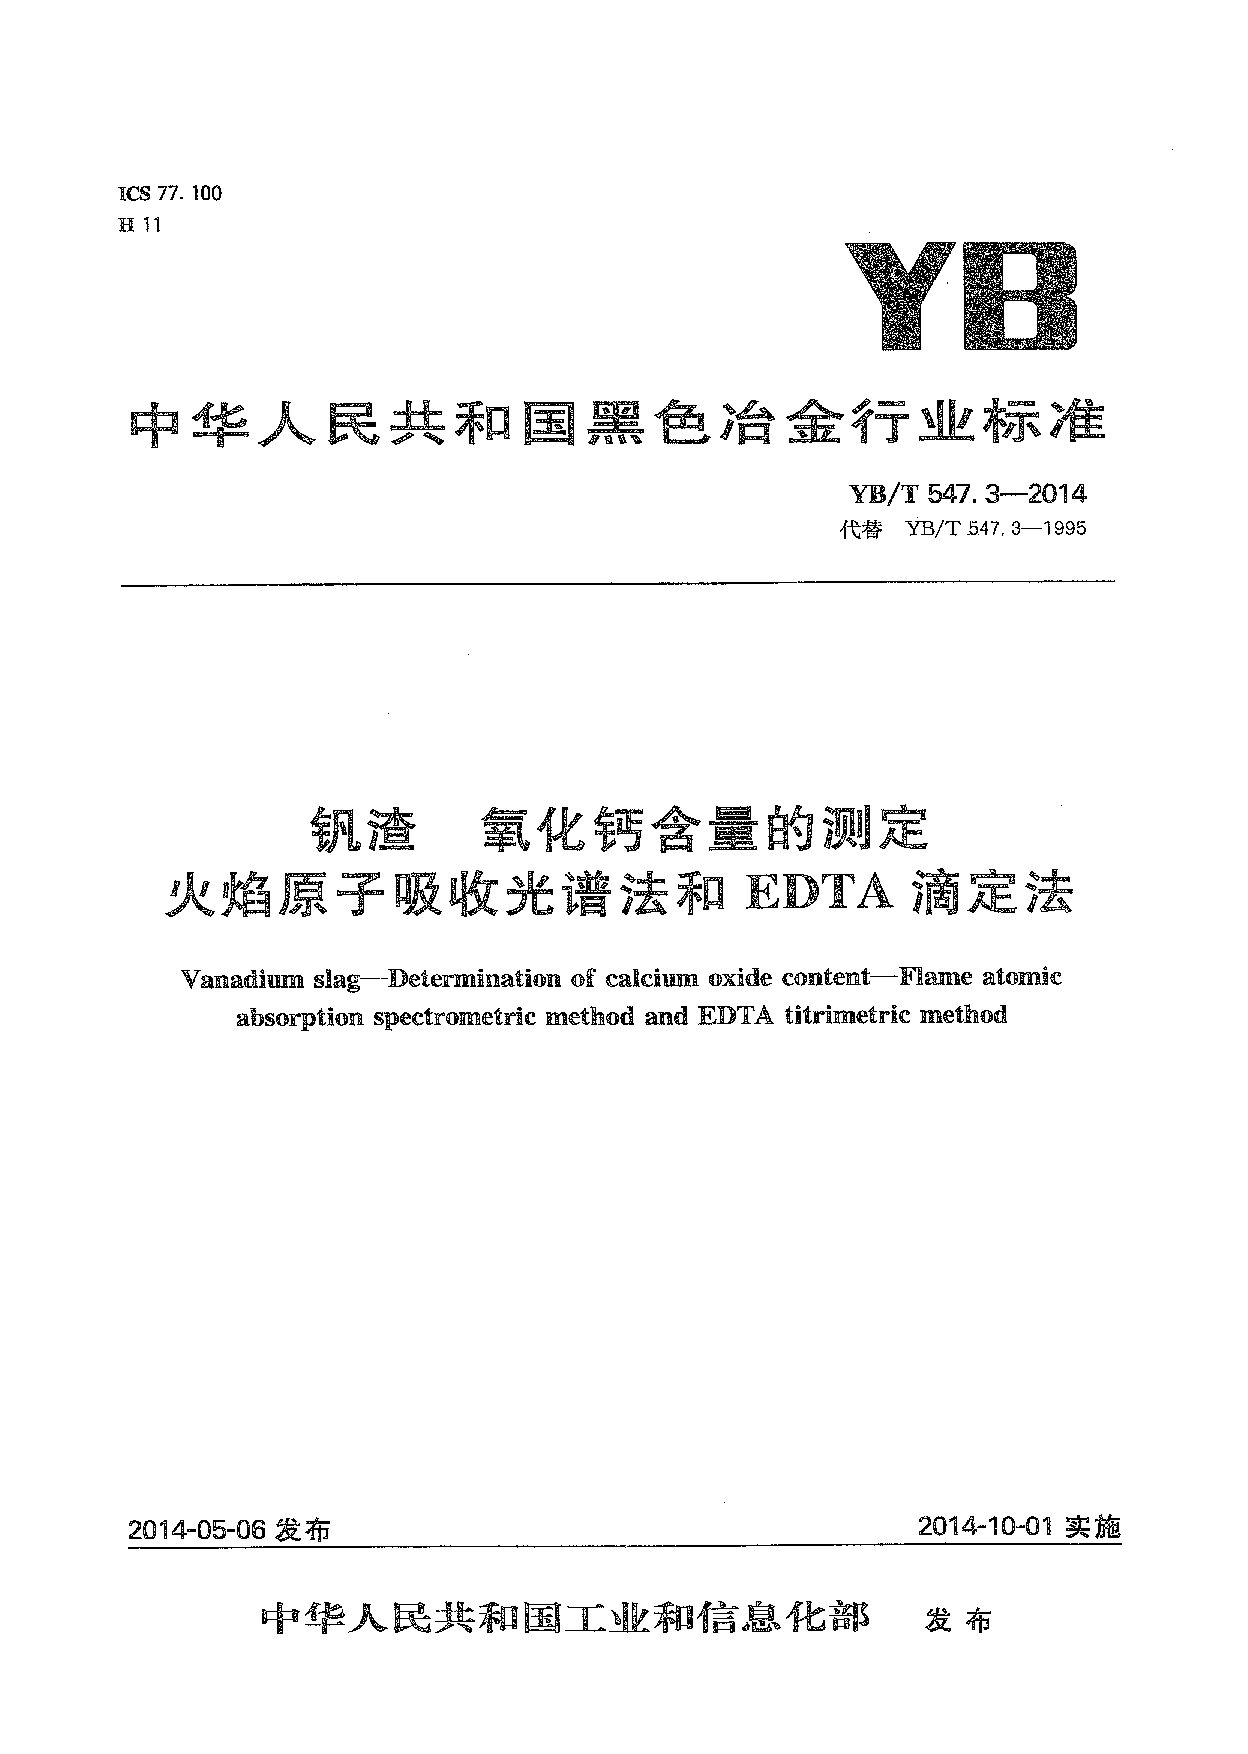 YB/T 547.3-2014